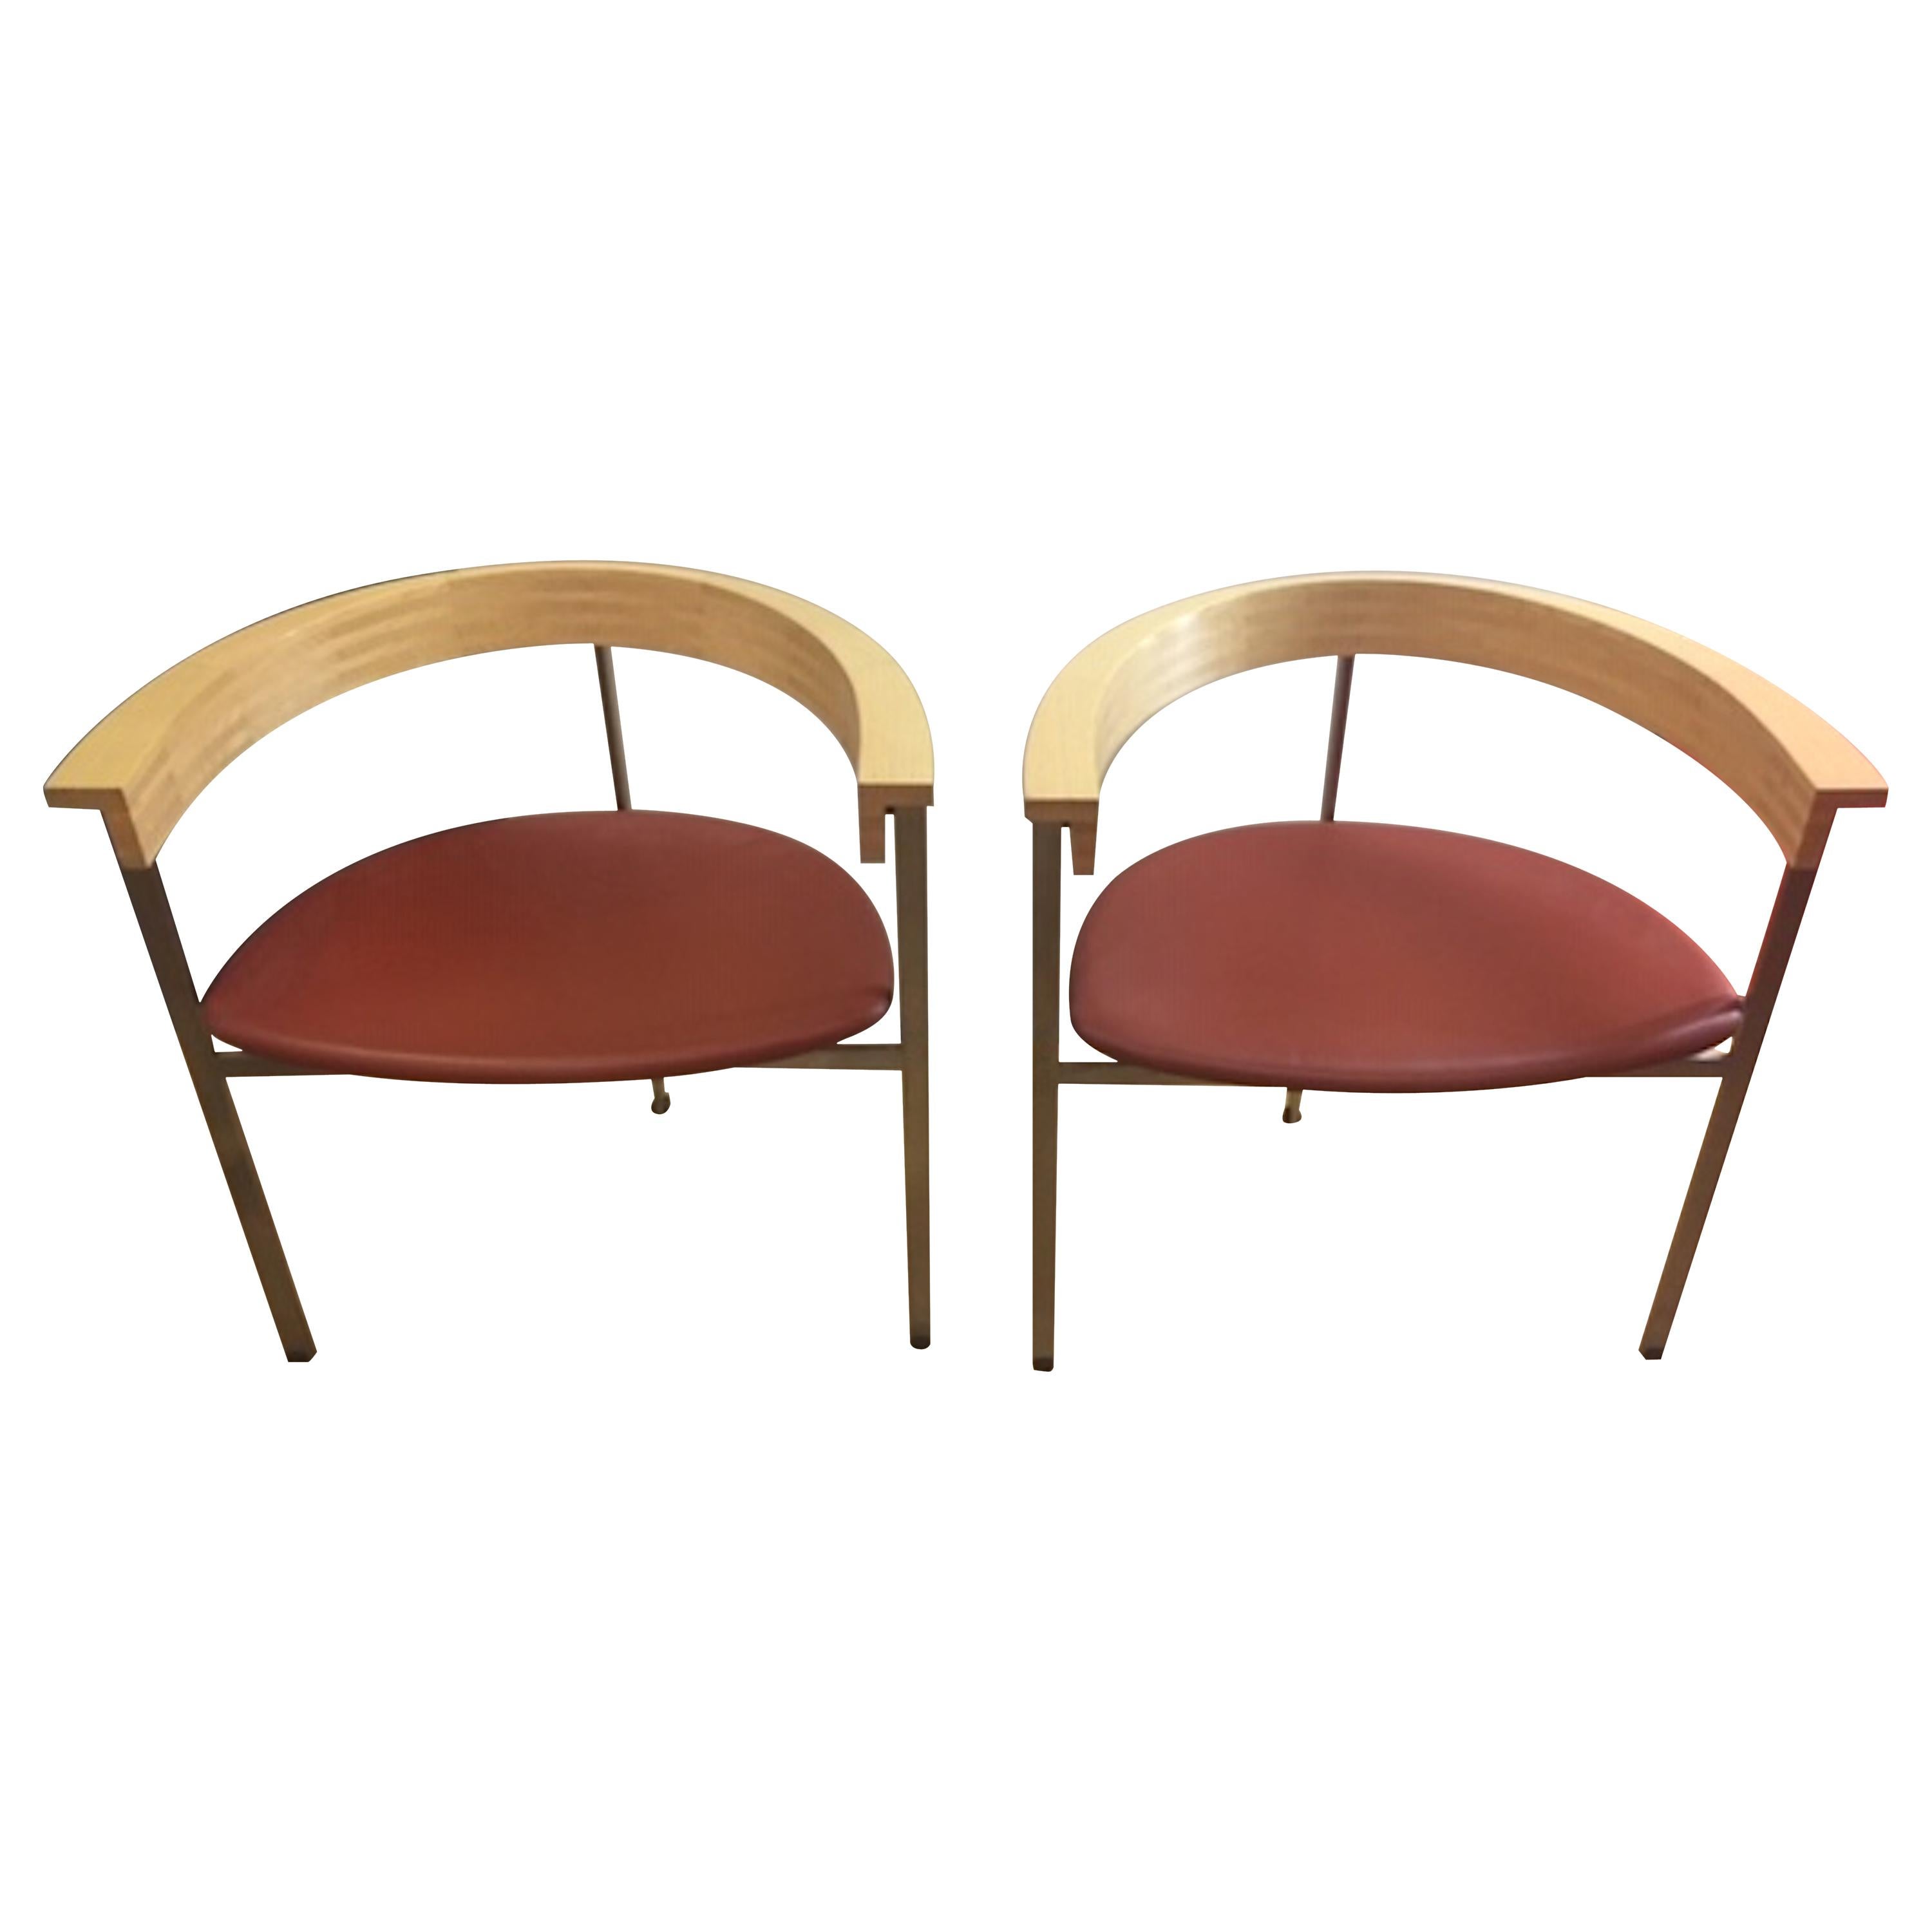 Pair of Poul Kjaerholm PK 11 Chairs, Stamped